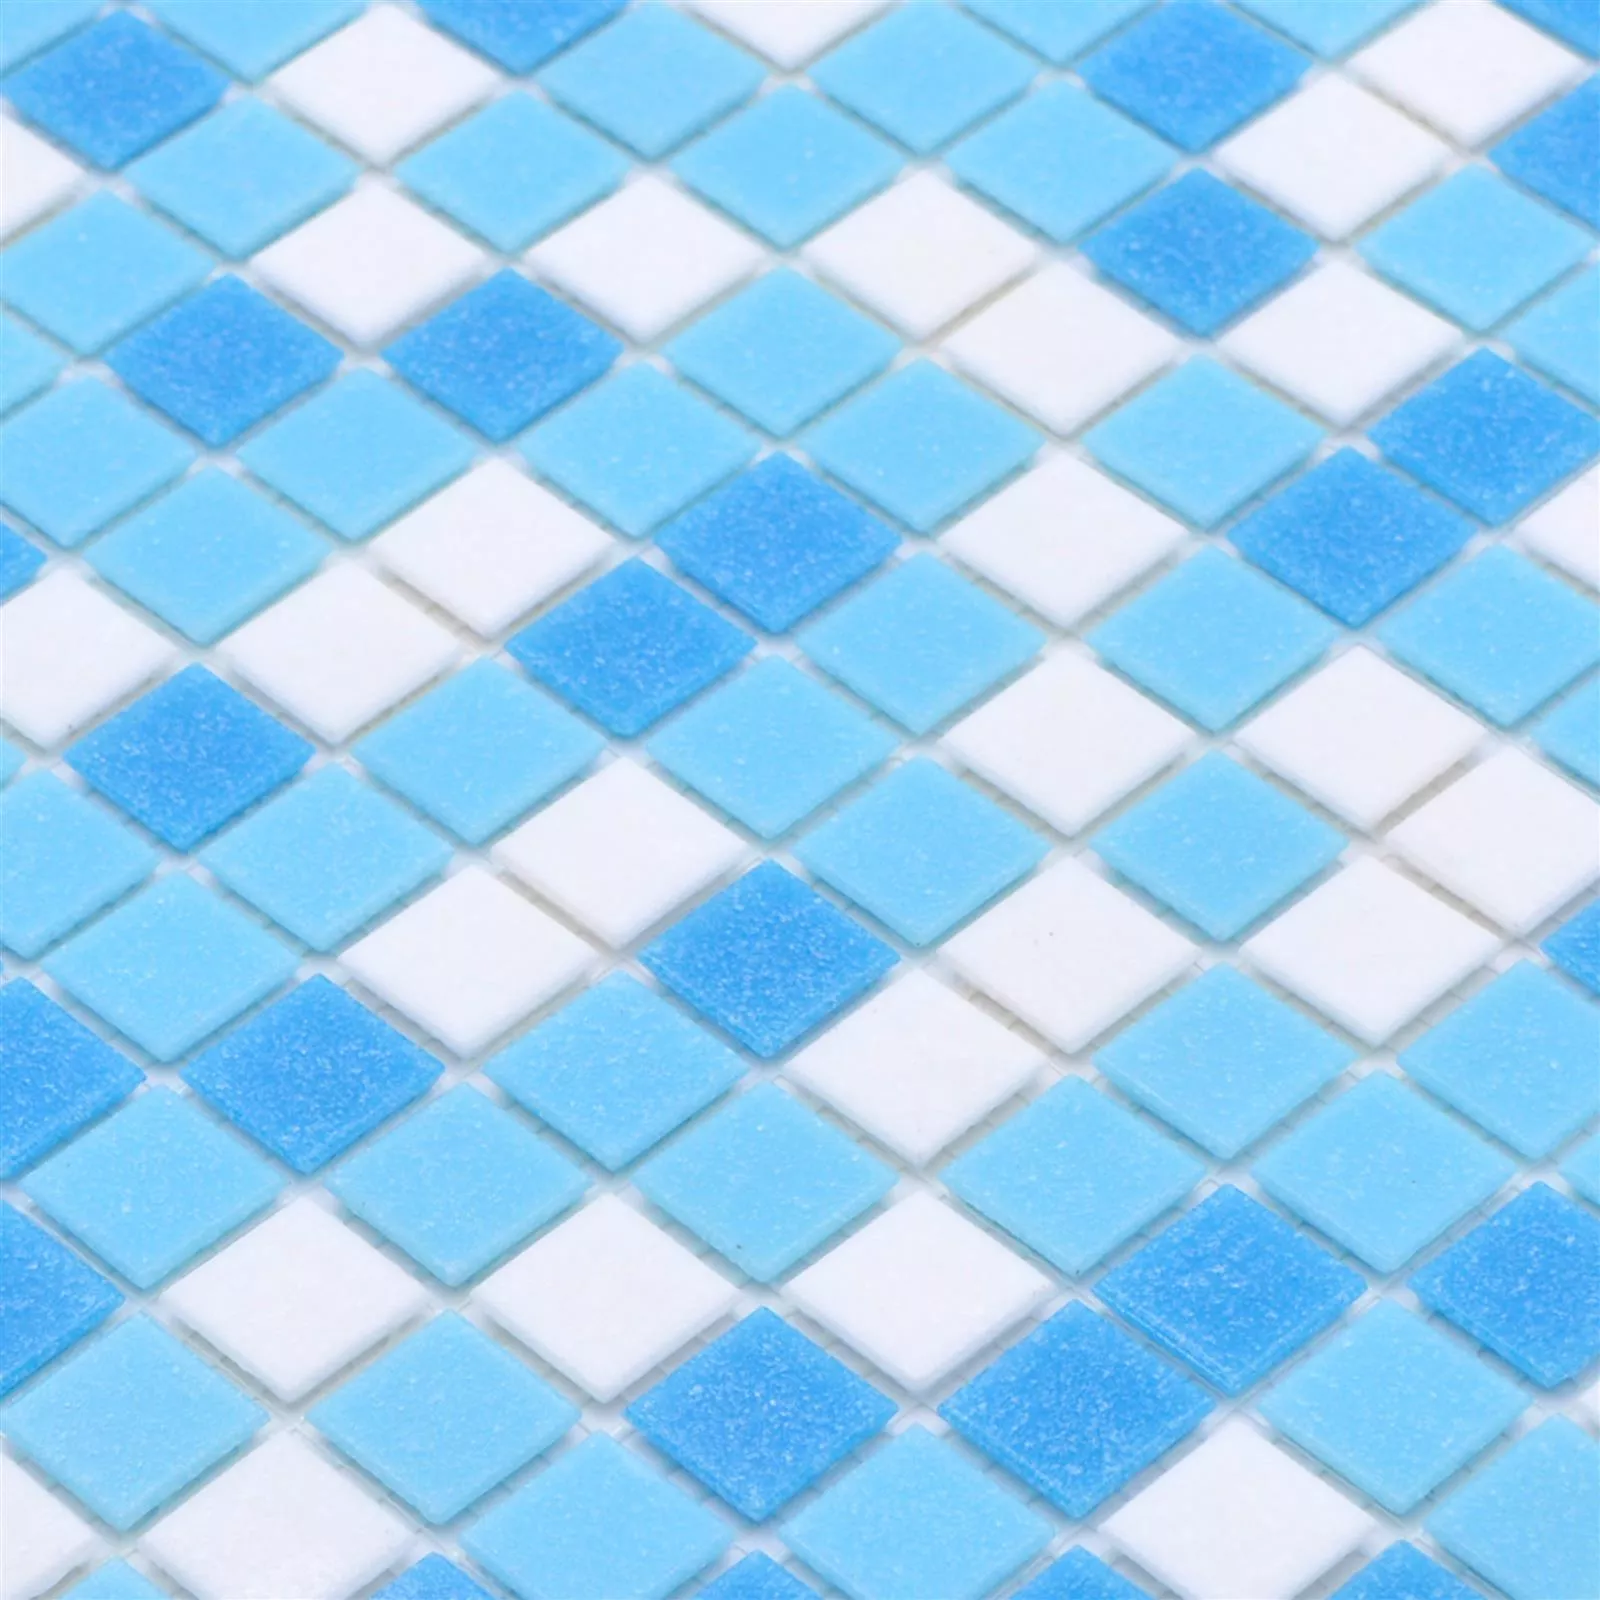 Sample Schwimmbad Pool Mosaik North Sea Weiß Blau Mix